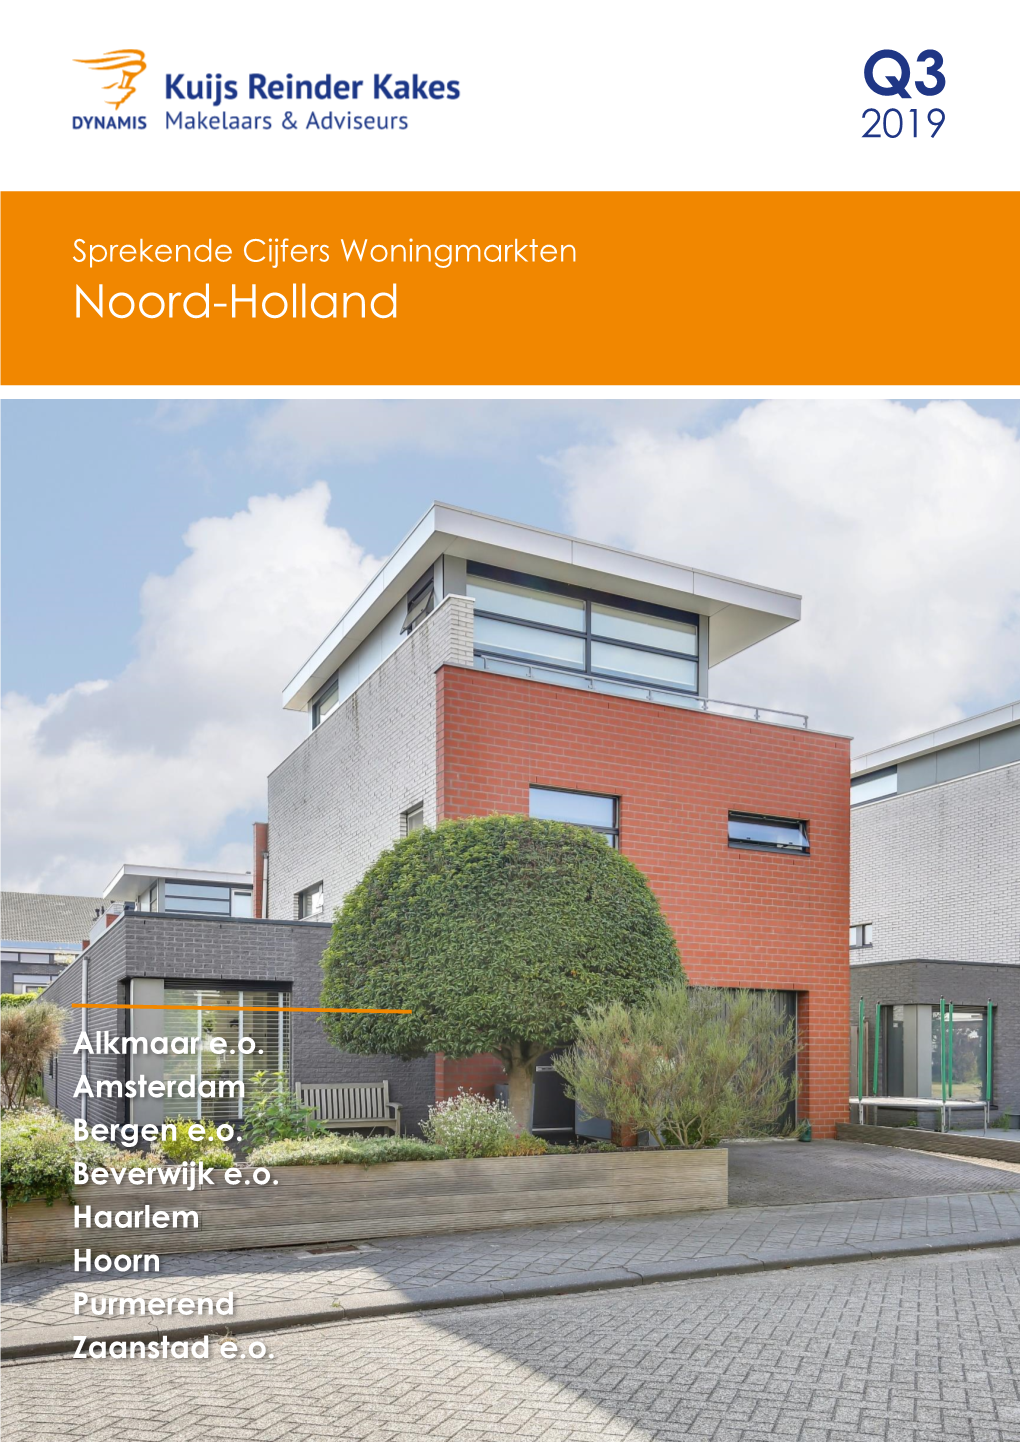 Sprekende Cijfers Woningmarkten Noord-Holland